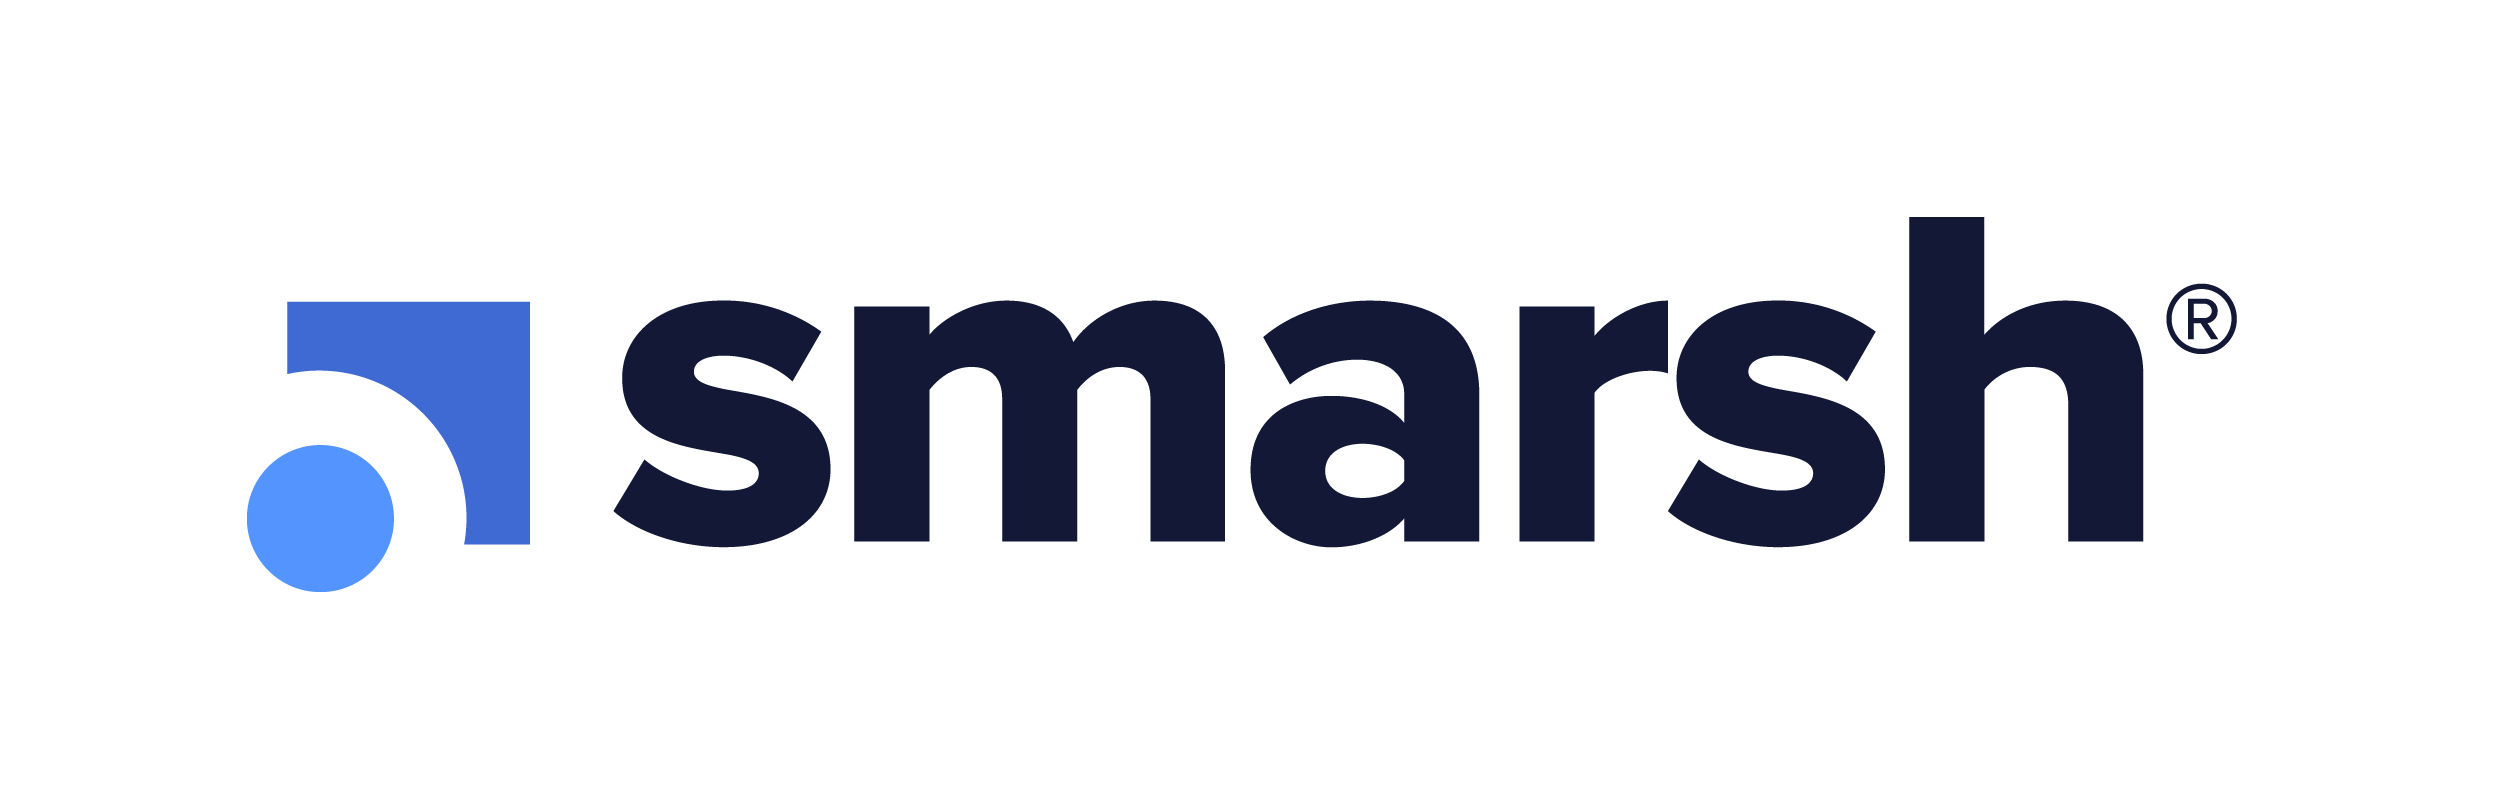 Smarsh-logo-reg-color-L (3)